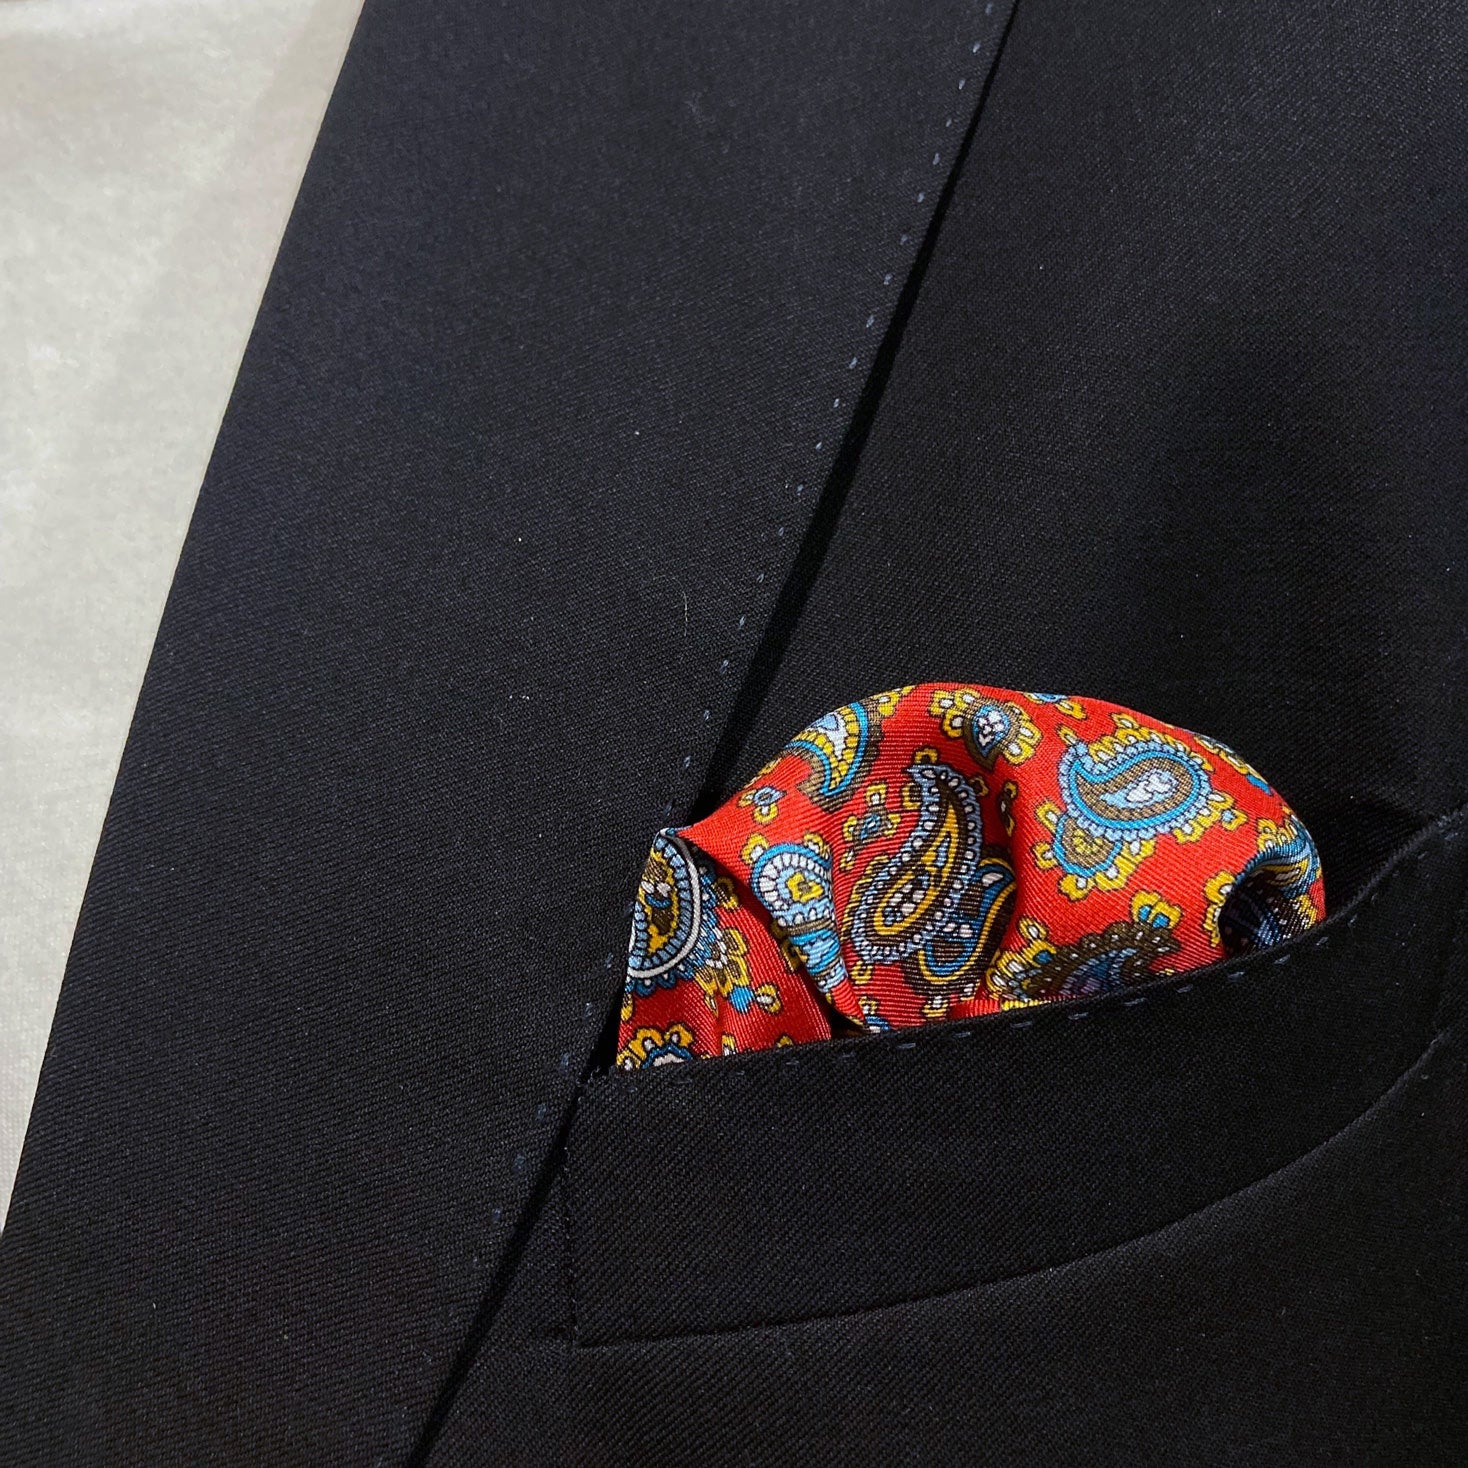 Close-up of the 'Shinjuku' silk pocket square in breast pocket of dark suit jacket.